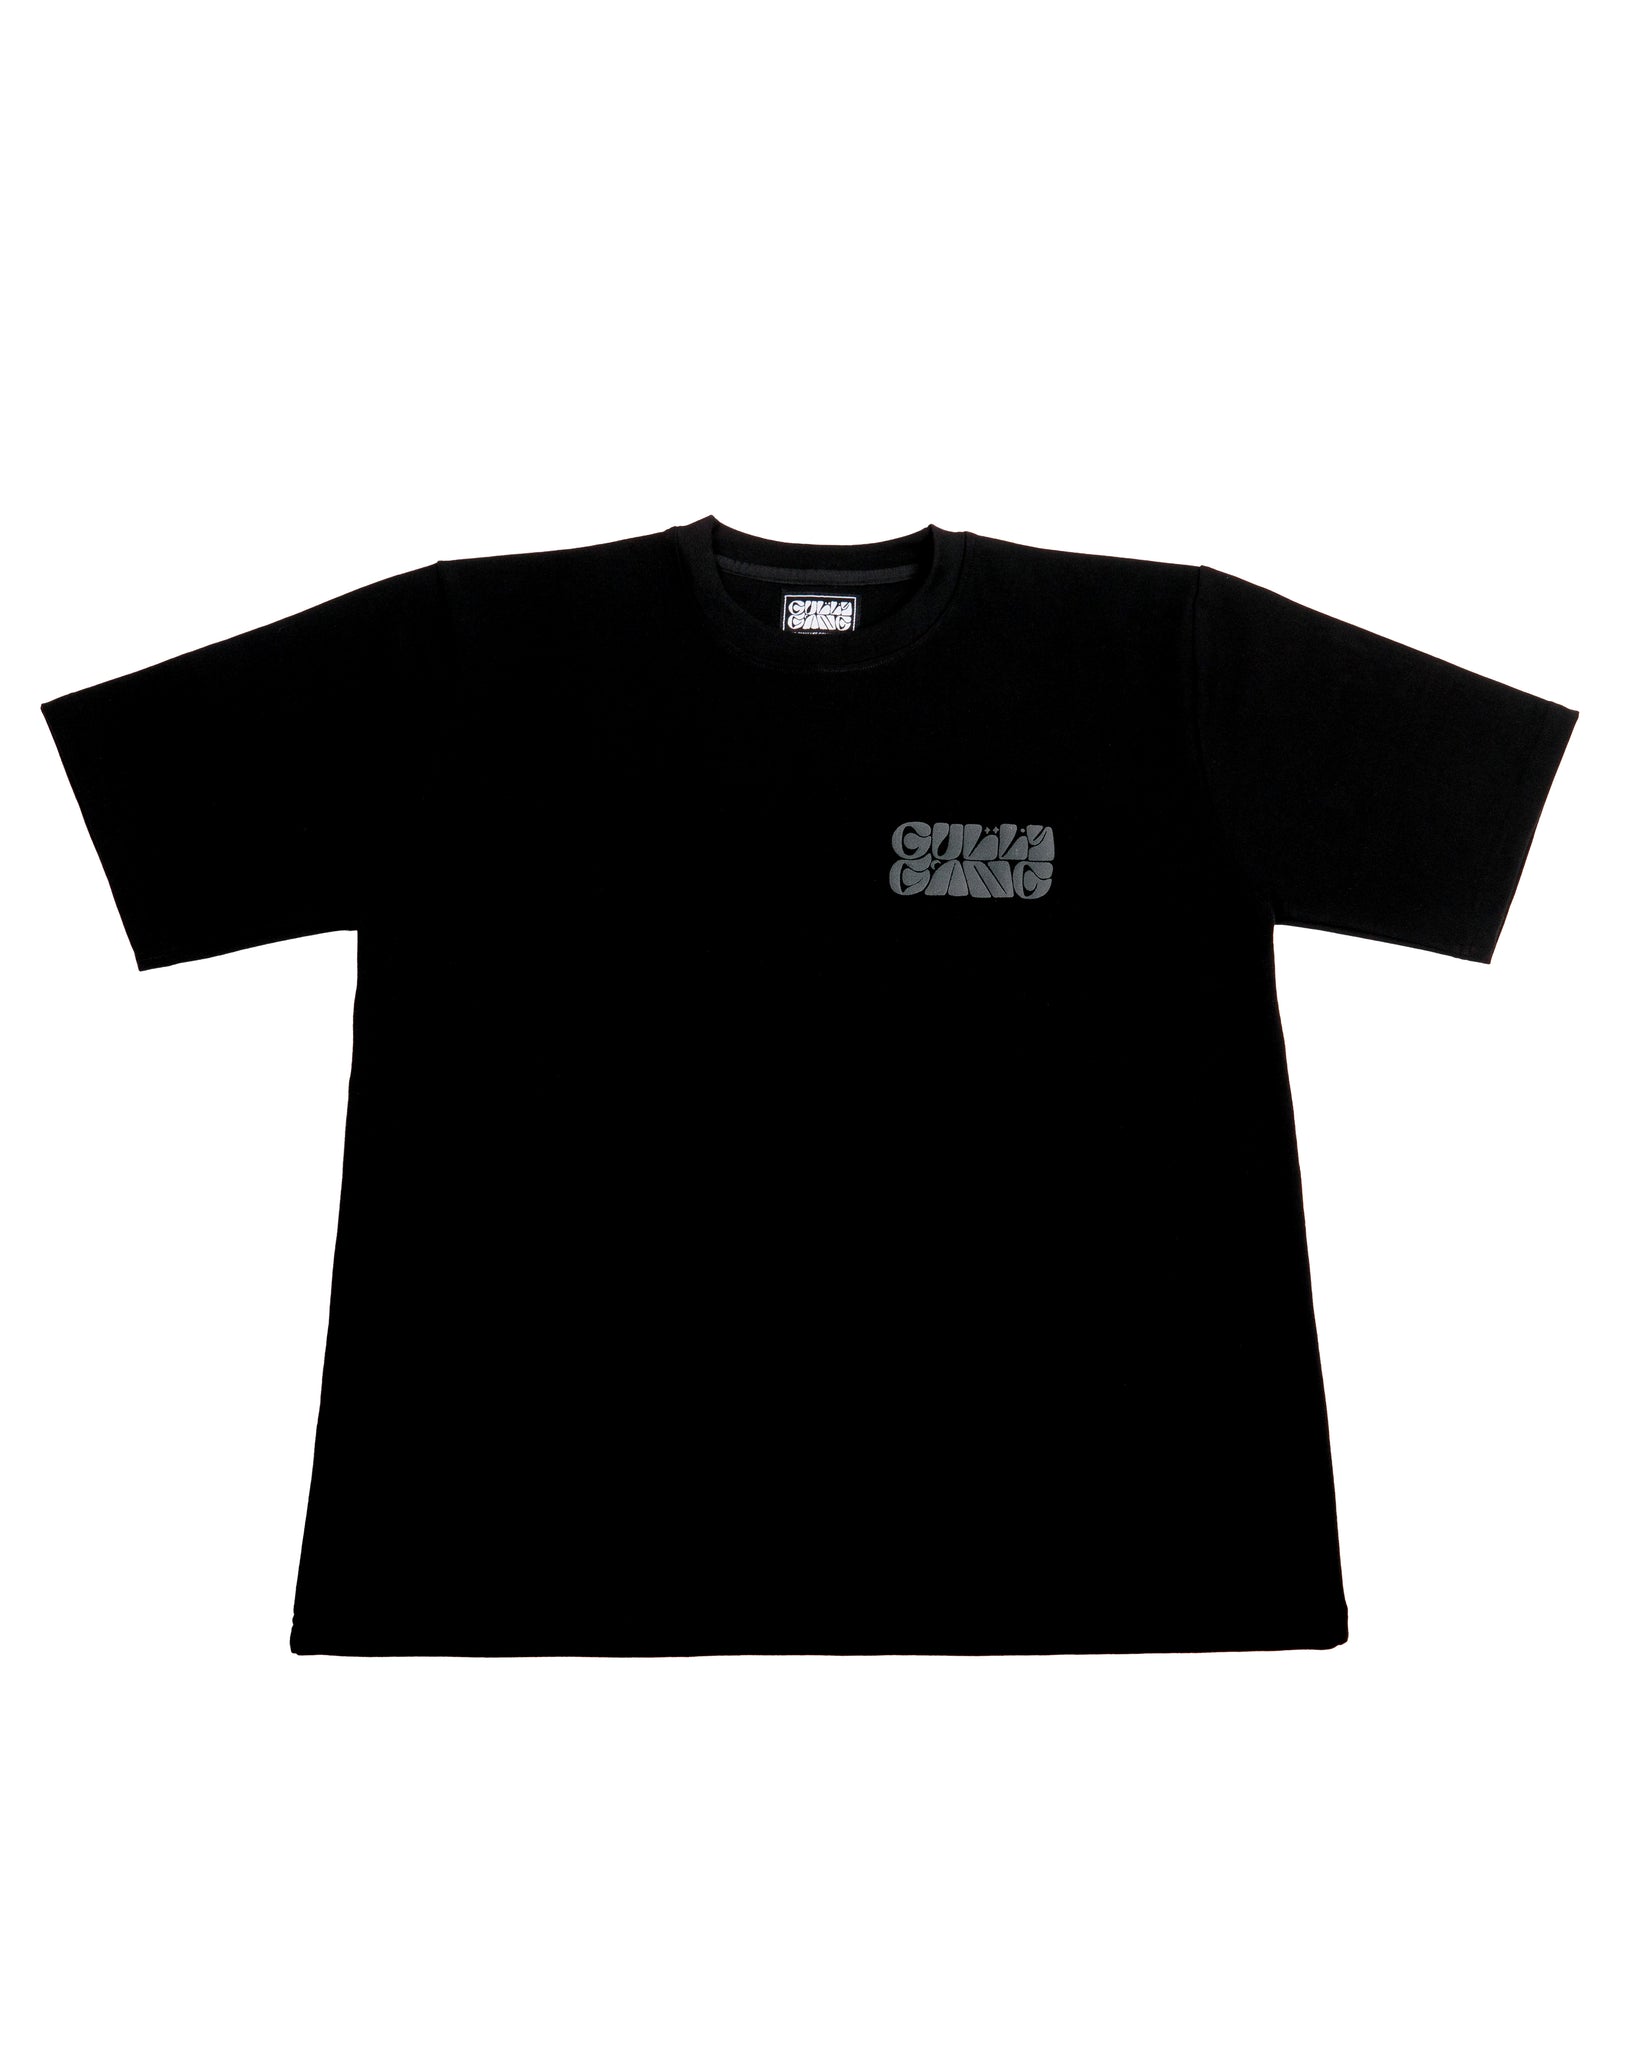 Gully Gang Parivaar Black Oversized T-shirt